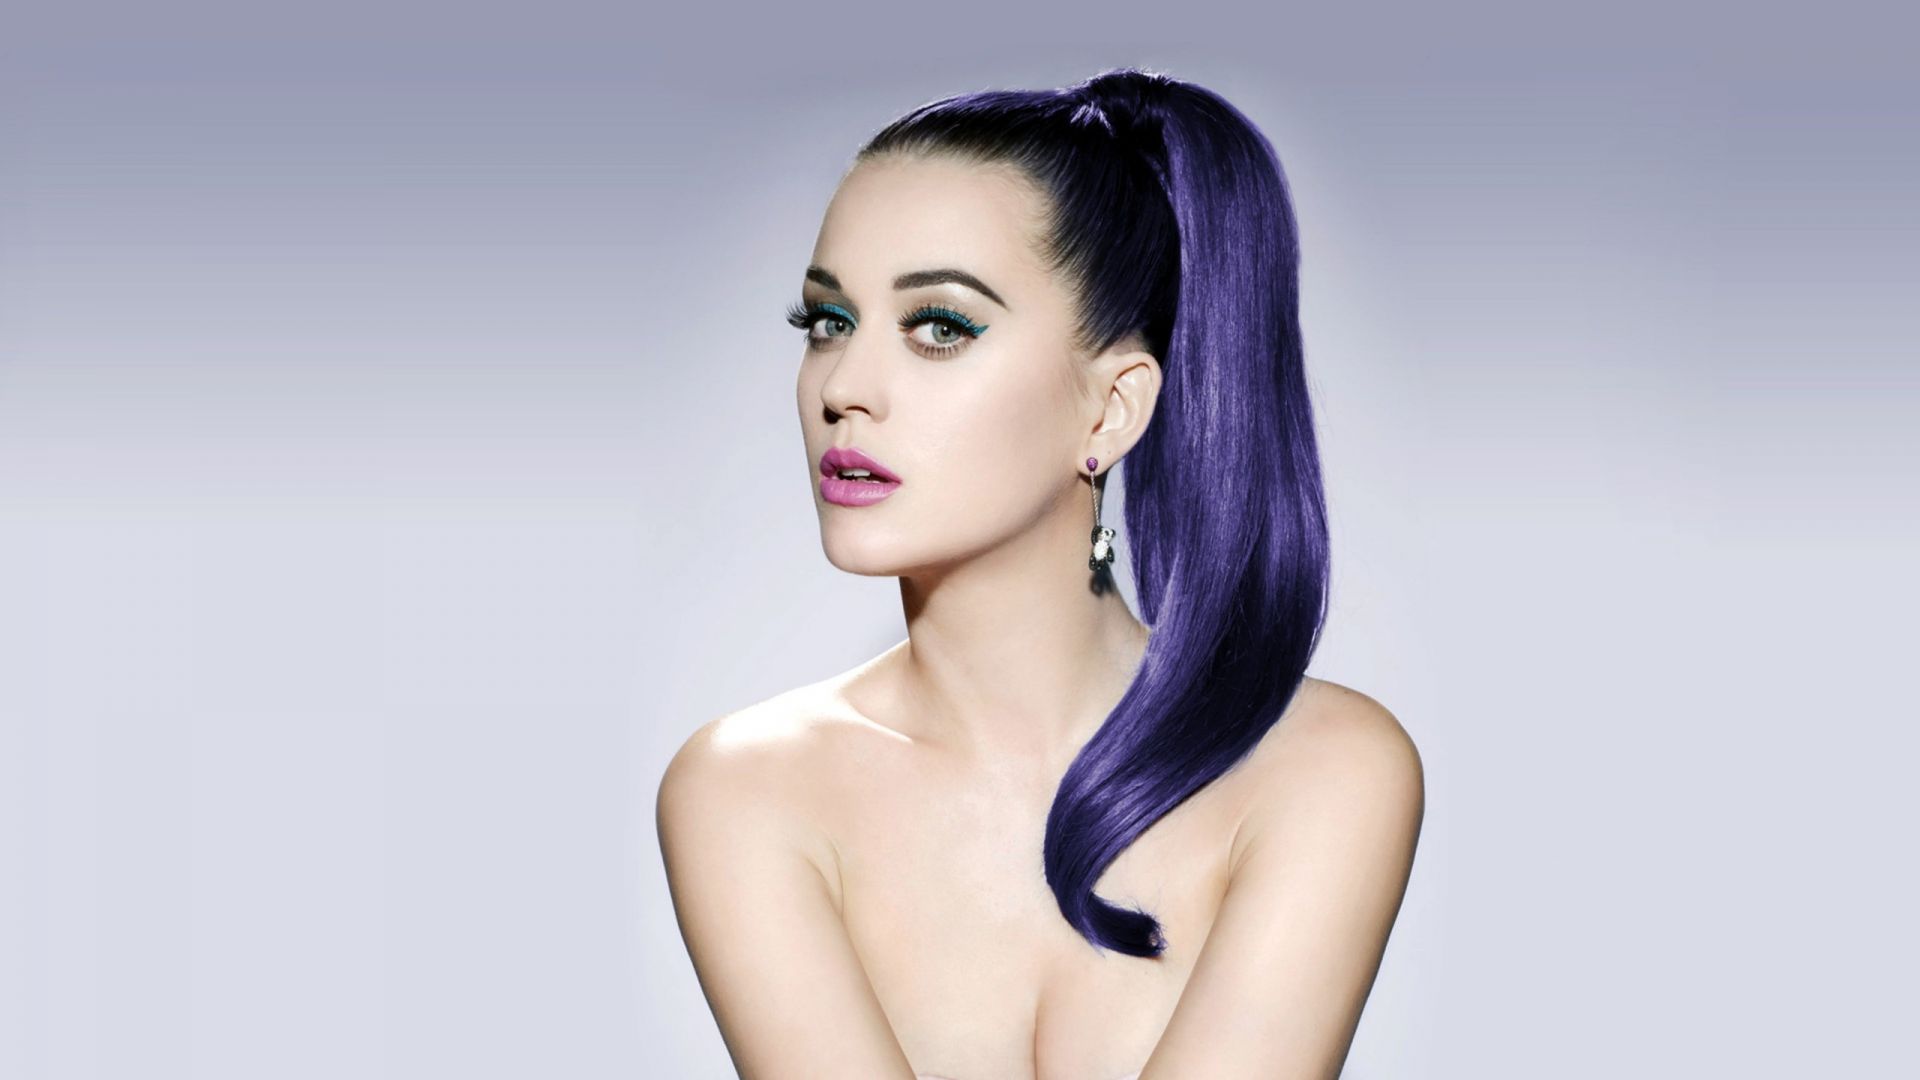 Wallpaper Hot Singer Katy Perry